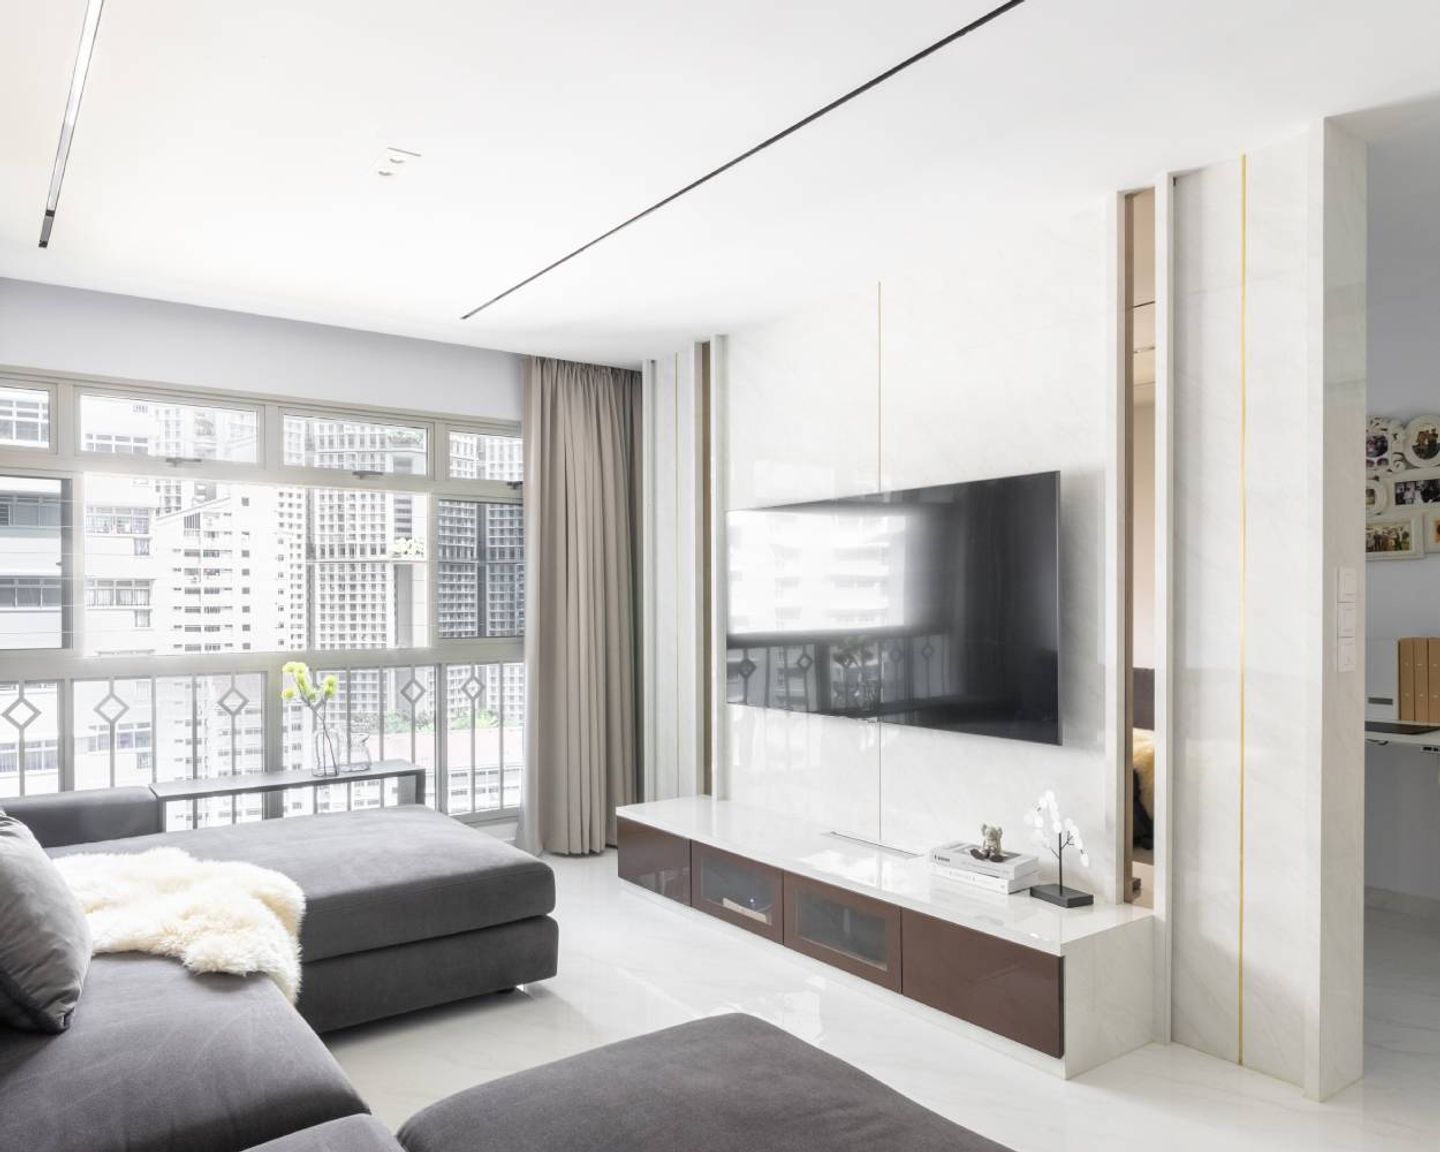 Single-Layered False Ceiling Design With Track Lights For Living Room - Livspace